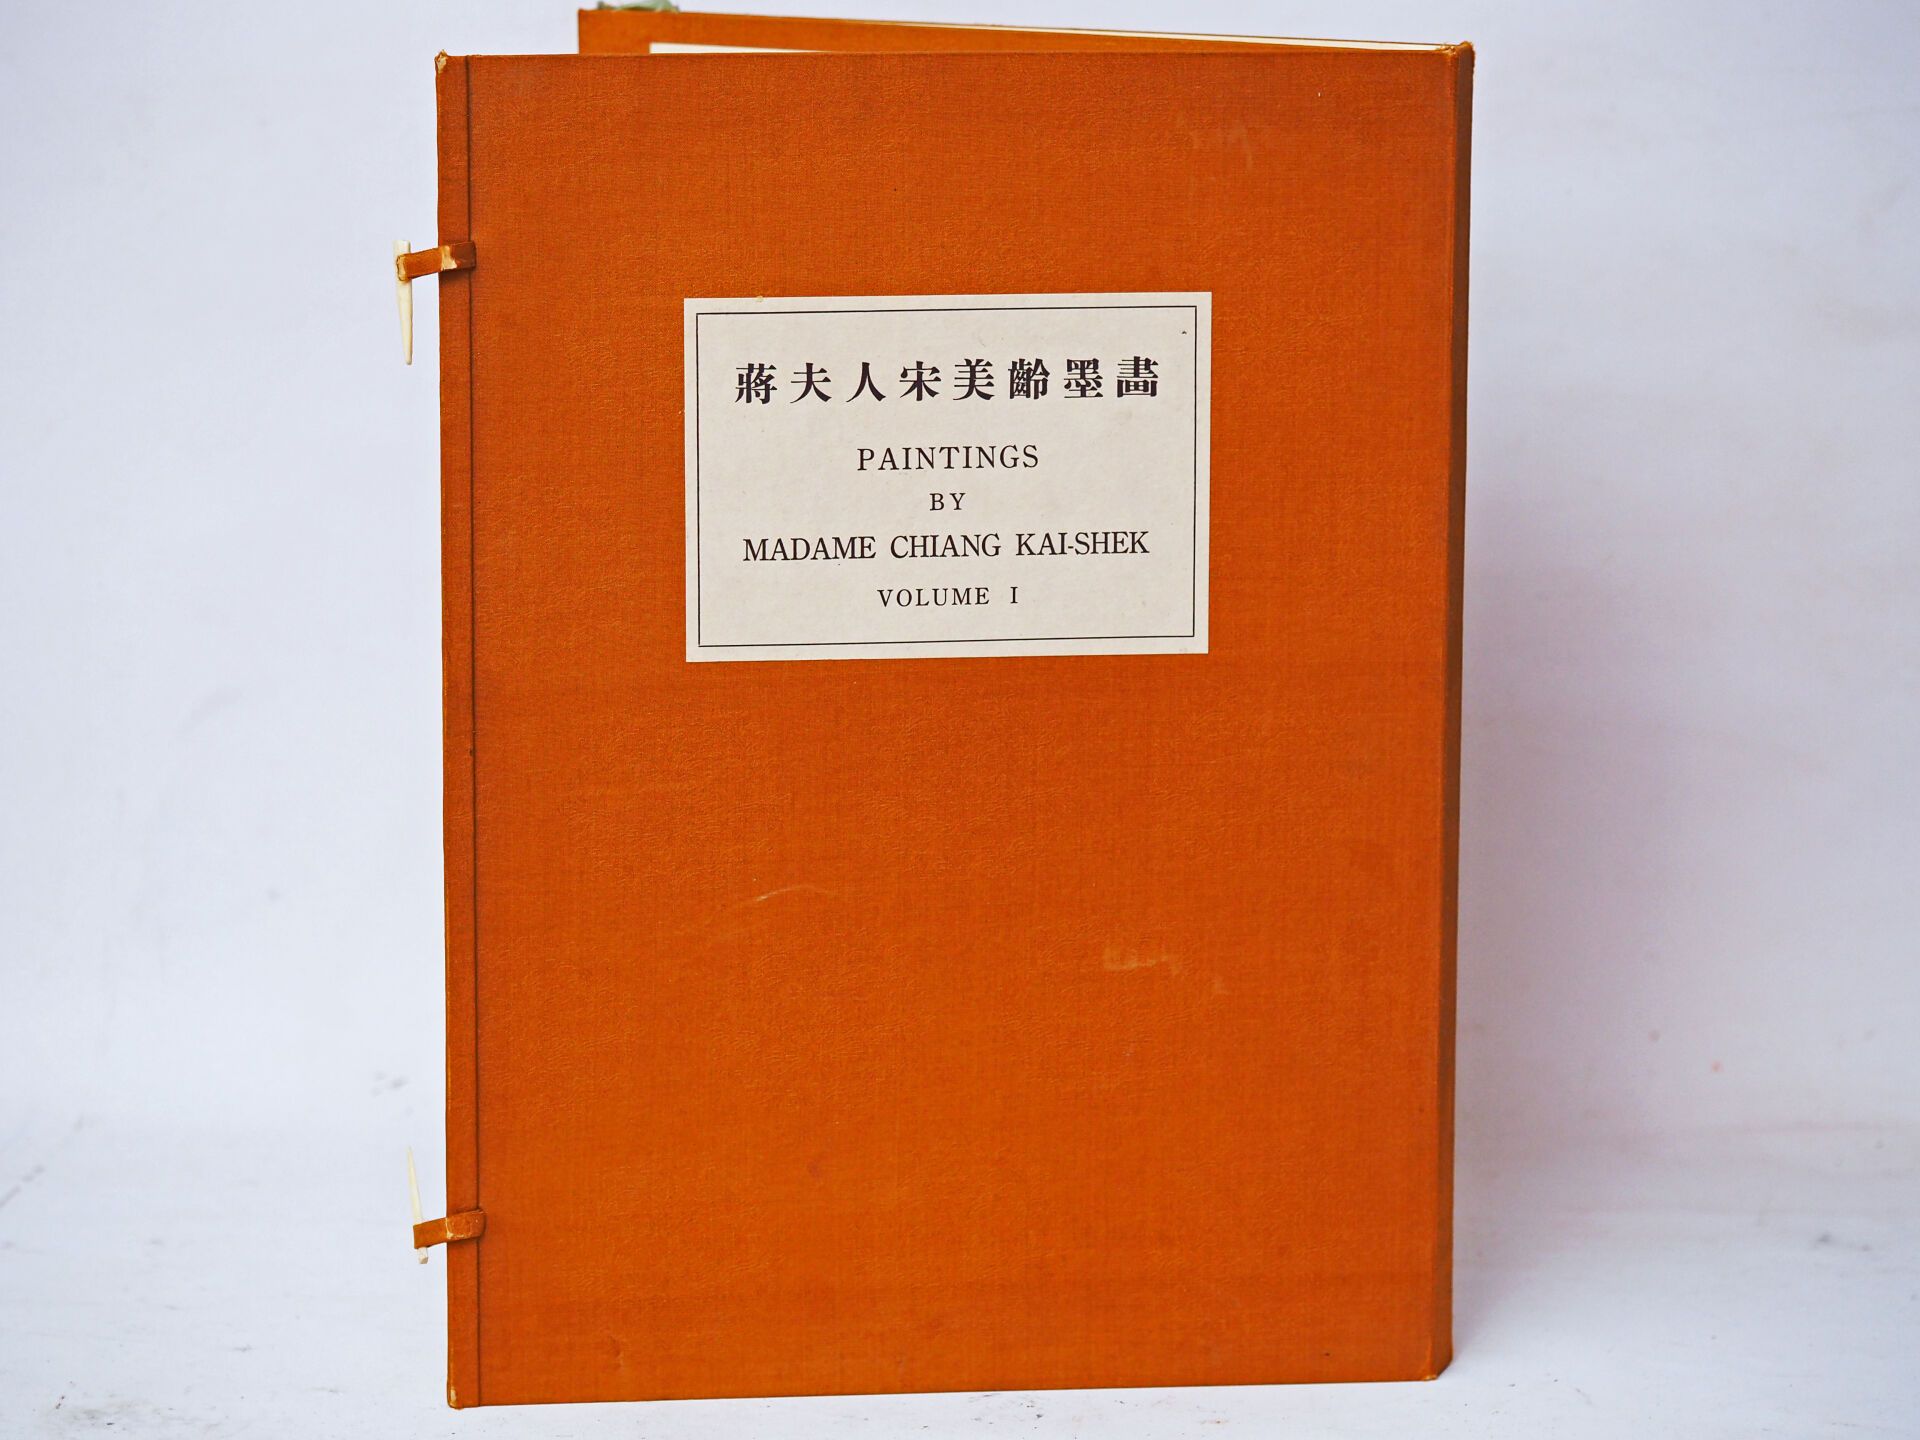 Null "Paintings by Madame Chiang Kai-Shek" Volume 1.
Ensemble de reproductions d&hellip;